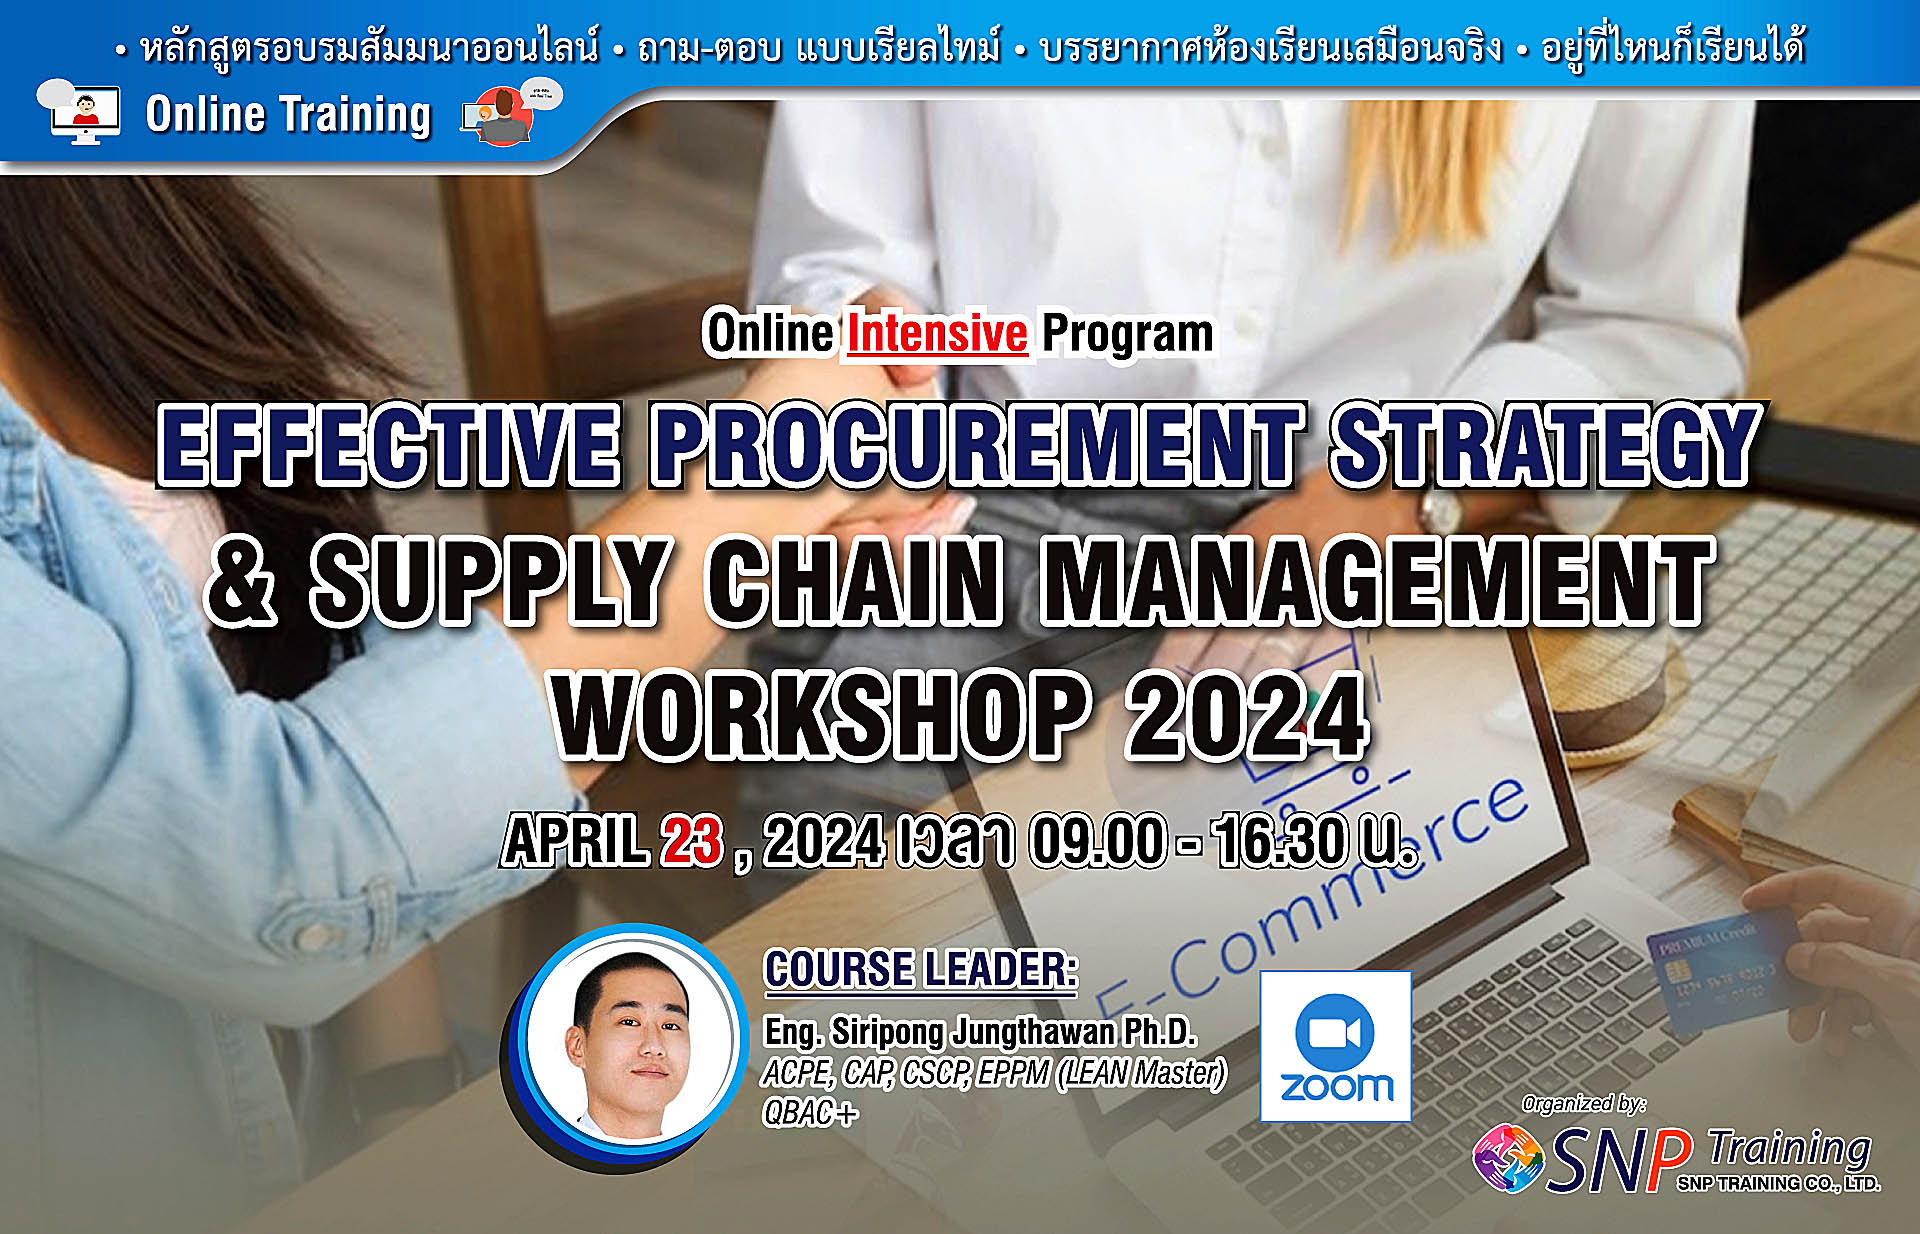 Effective Procurement Strategy & Supply Chain Management Workshop 2024